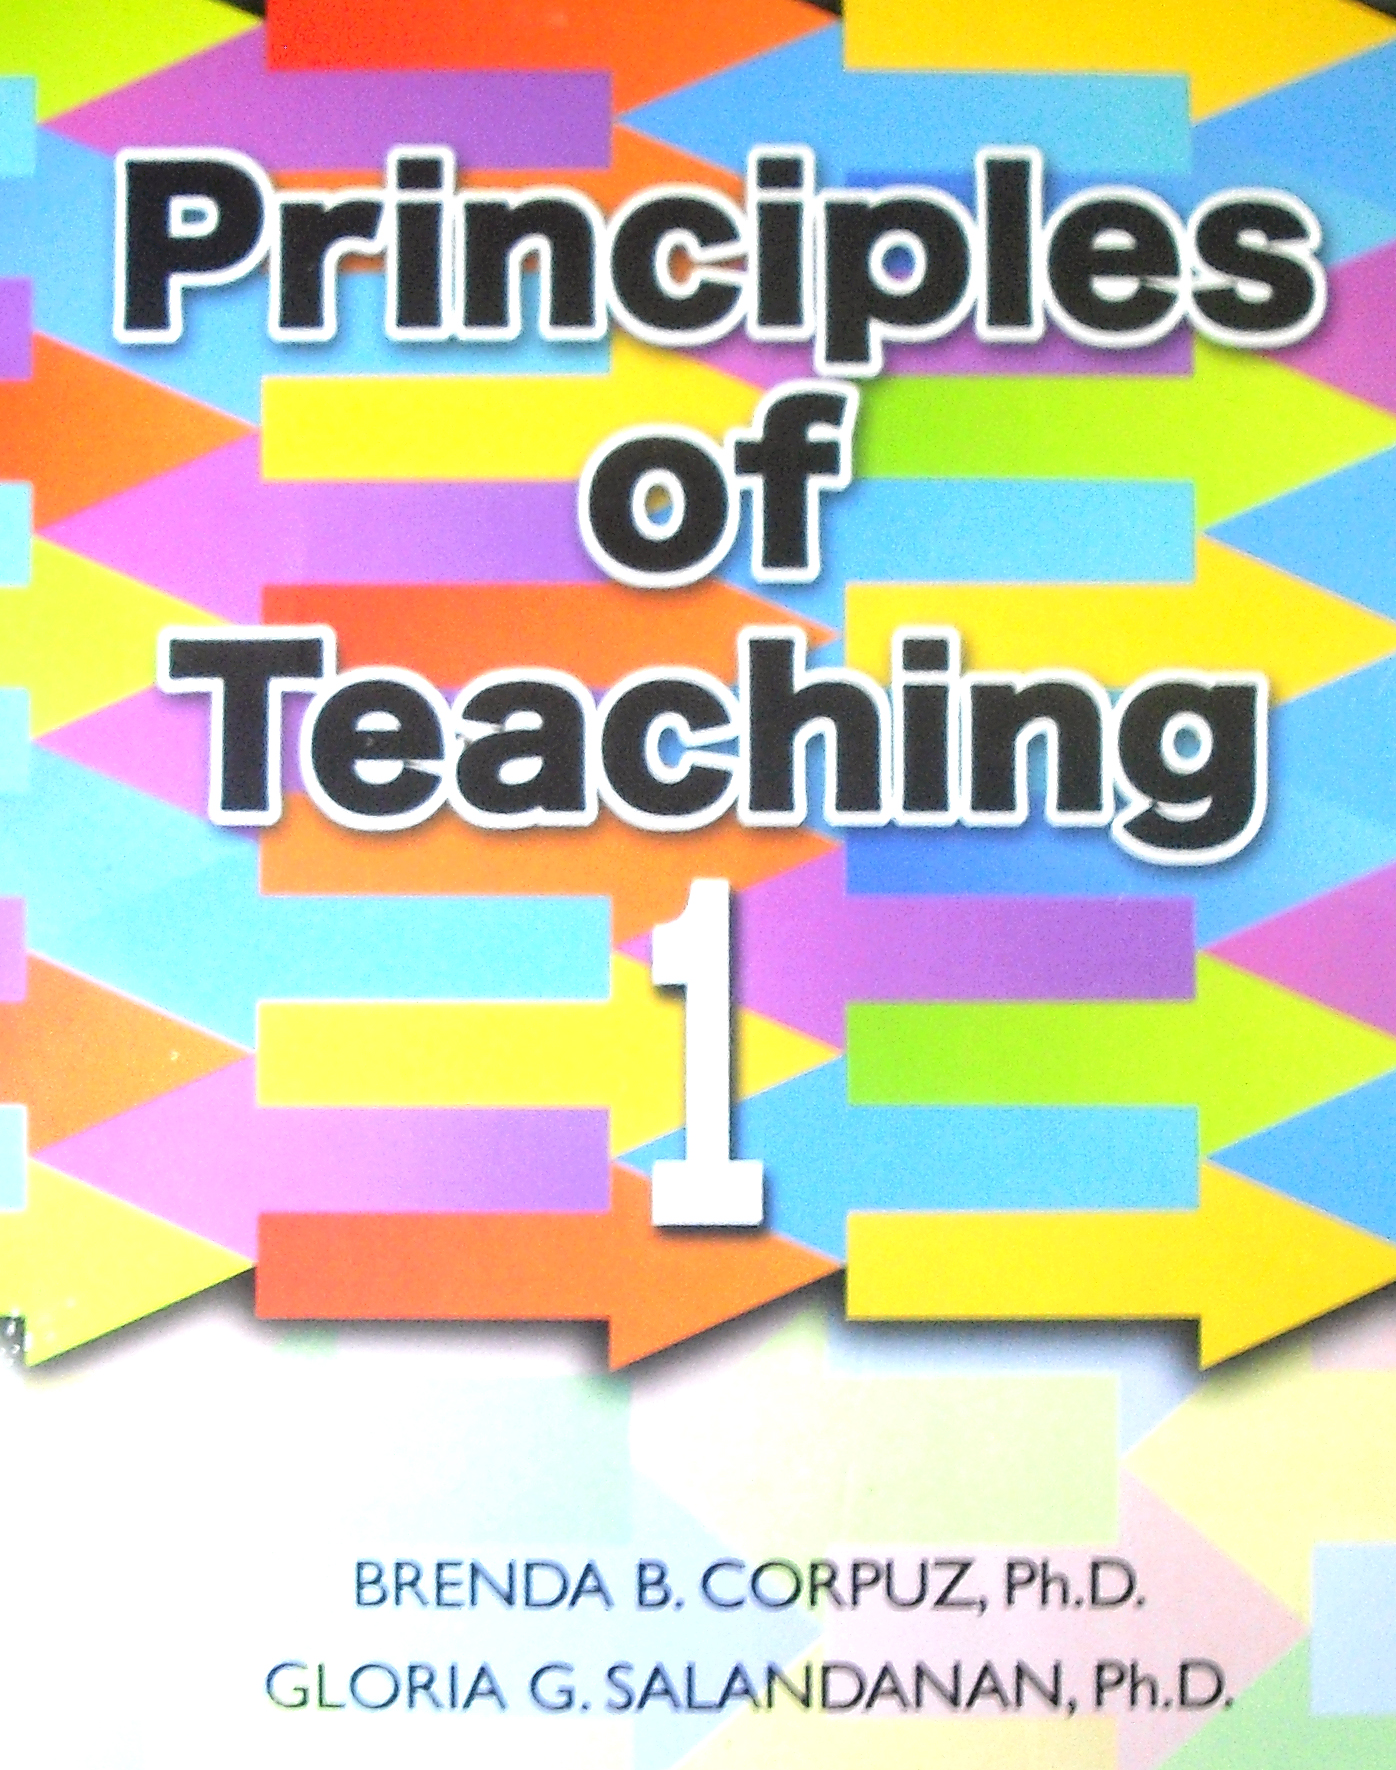 principles of teaching 2 by brenda corpuz pdf 19